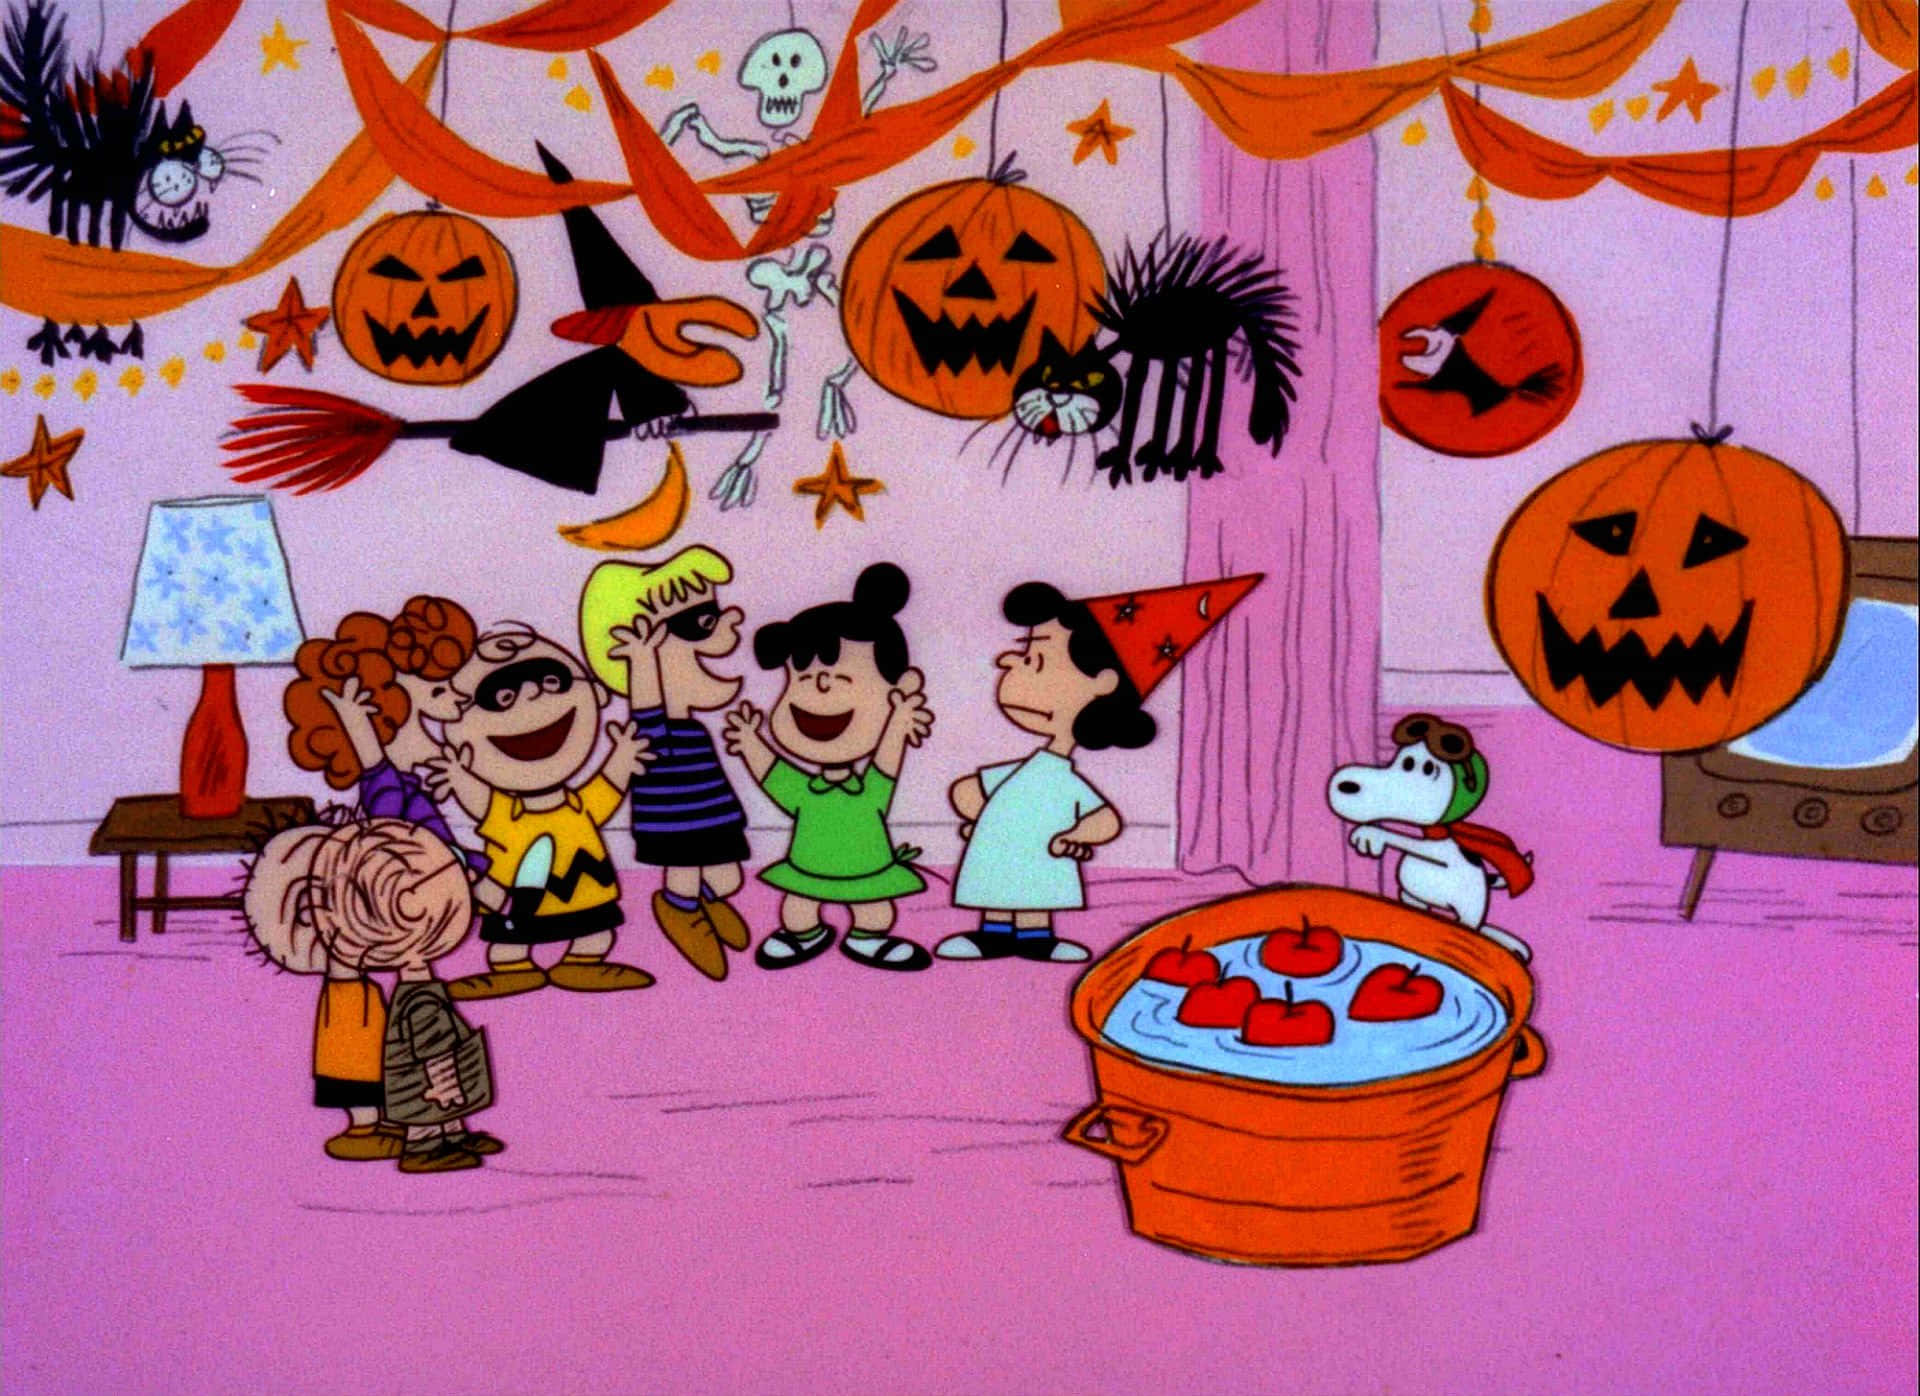 Celebrating a Spooky Peanuts Halloween! Wallpaper